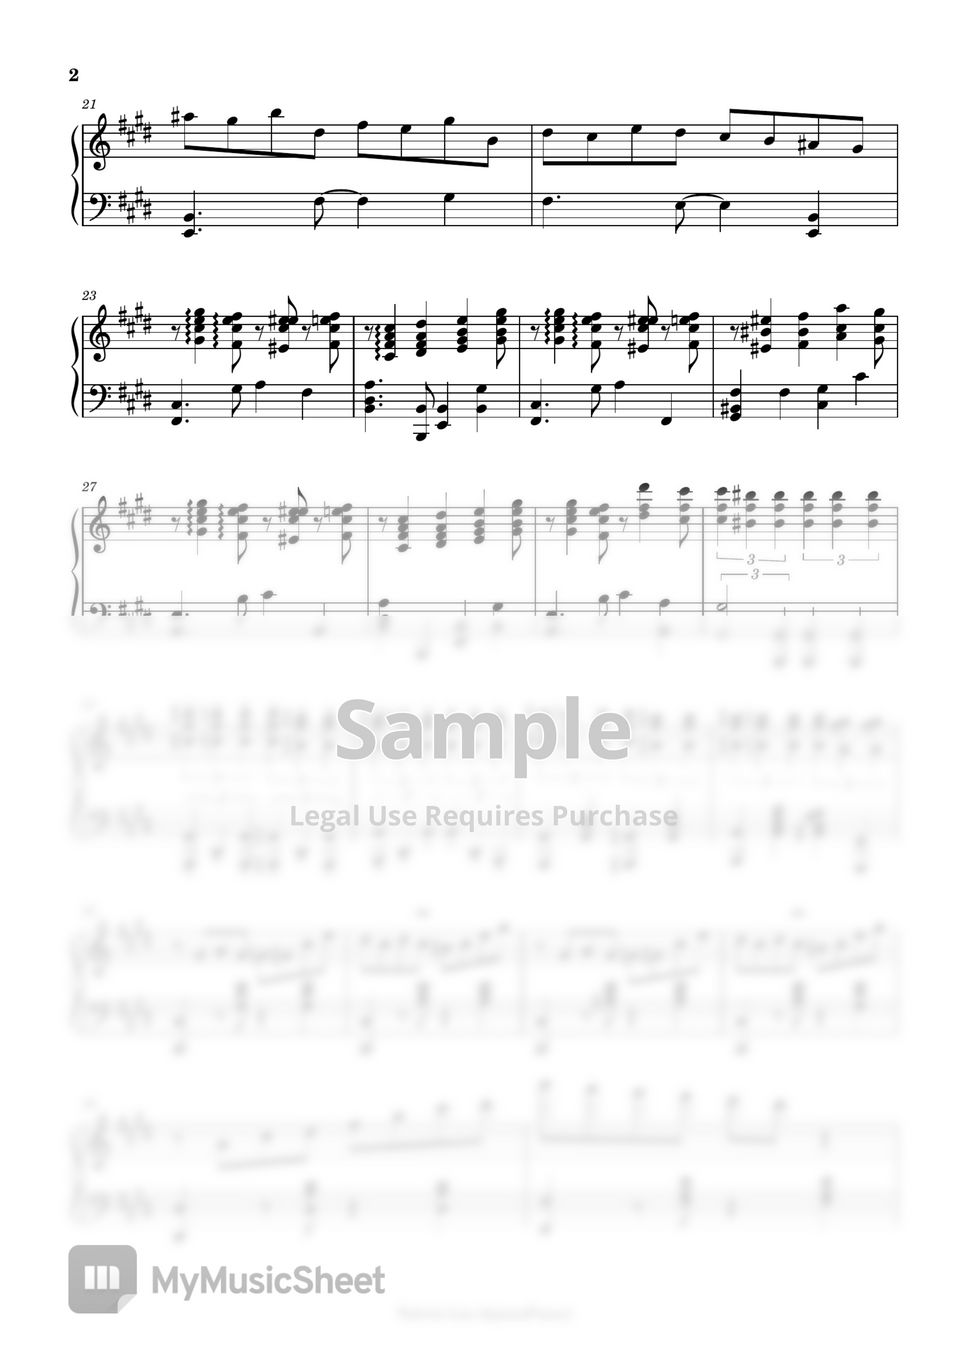 Chopin - Fantastic Impromptu Tango (Classic+Tango) by Yulrim Lee